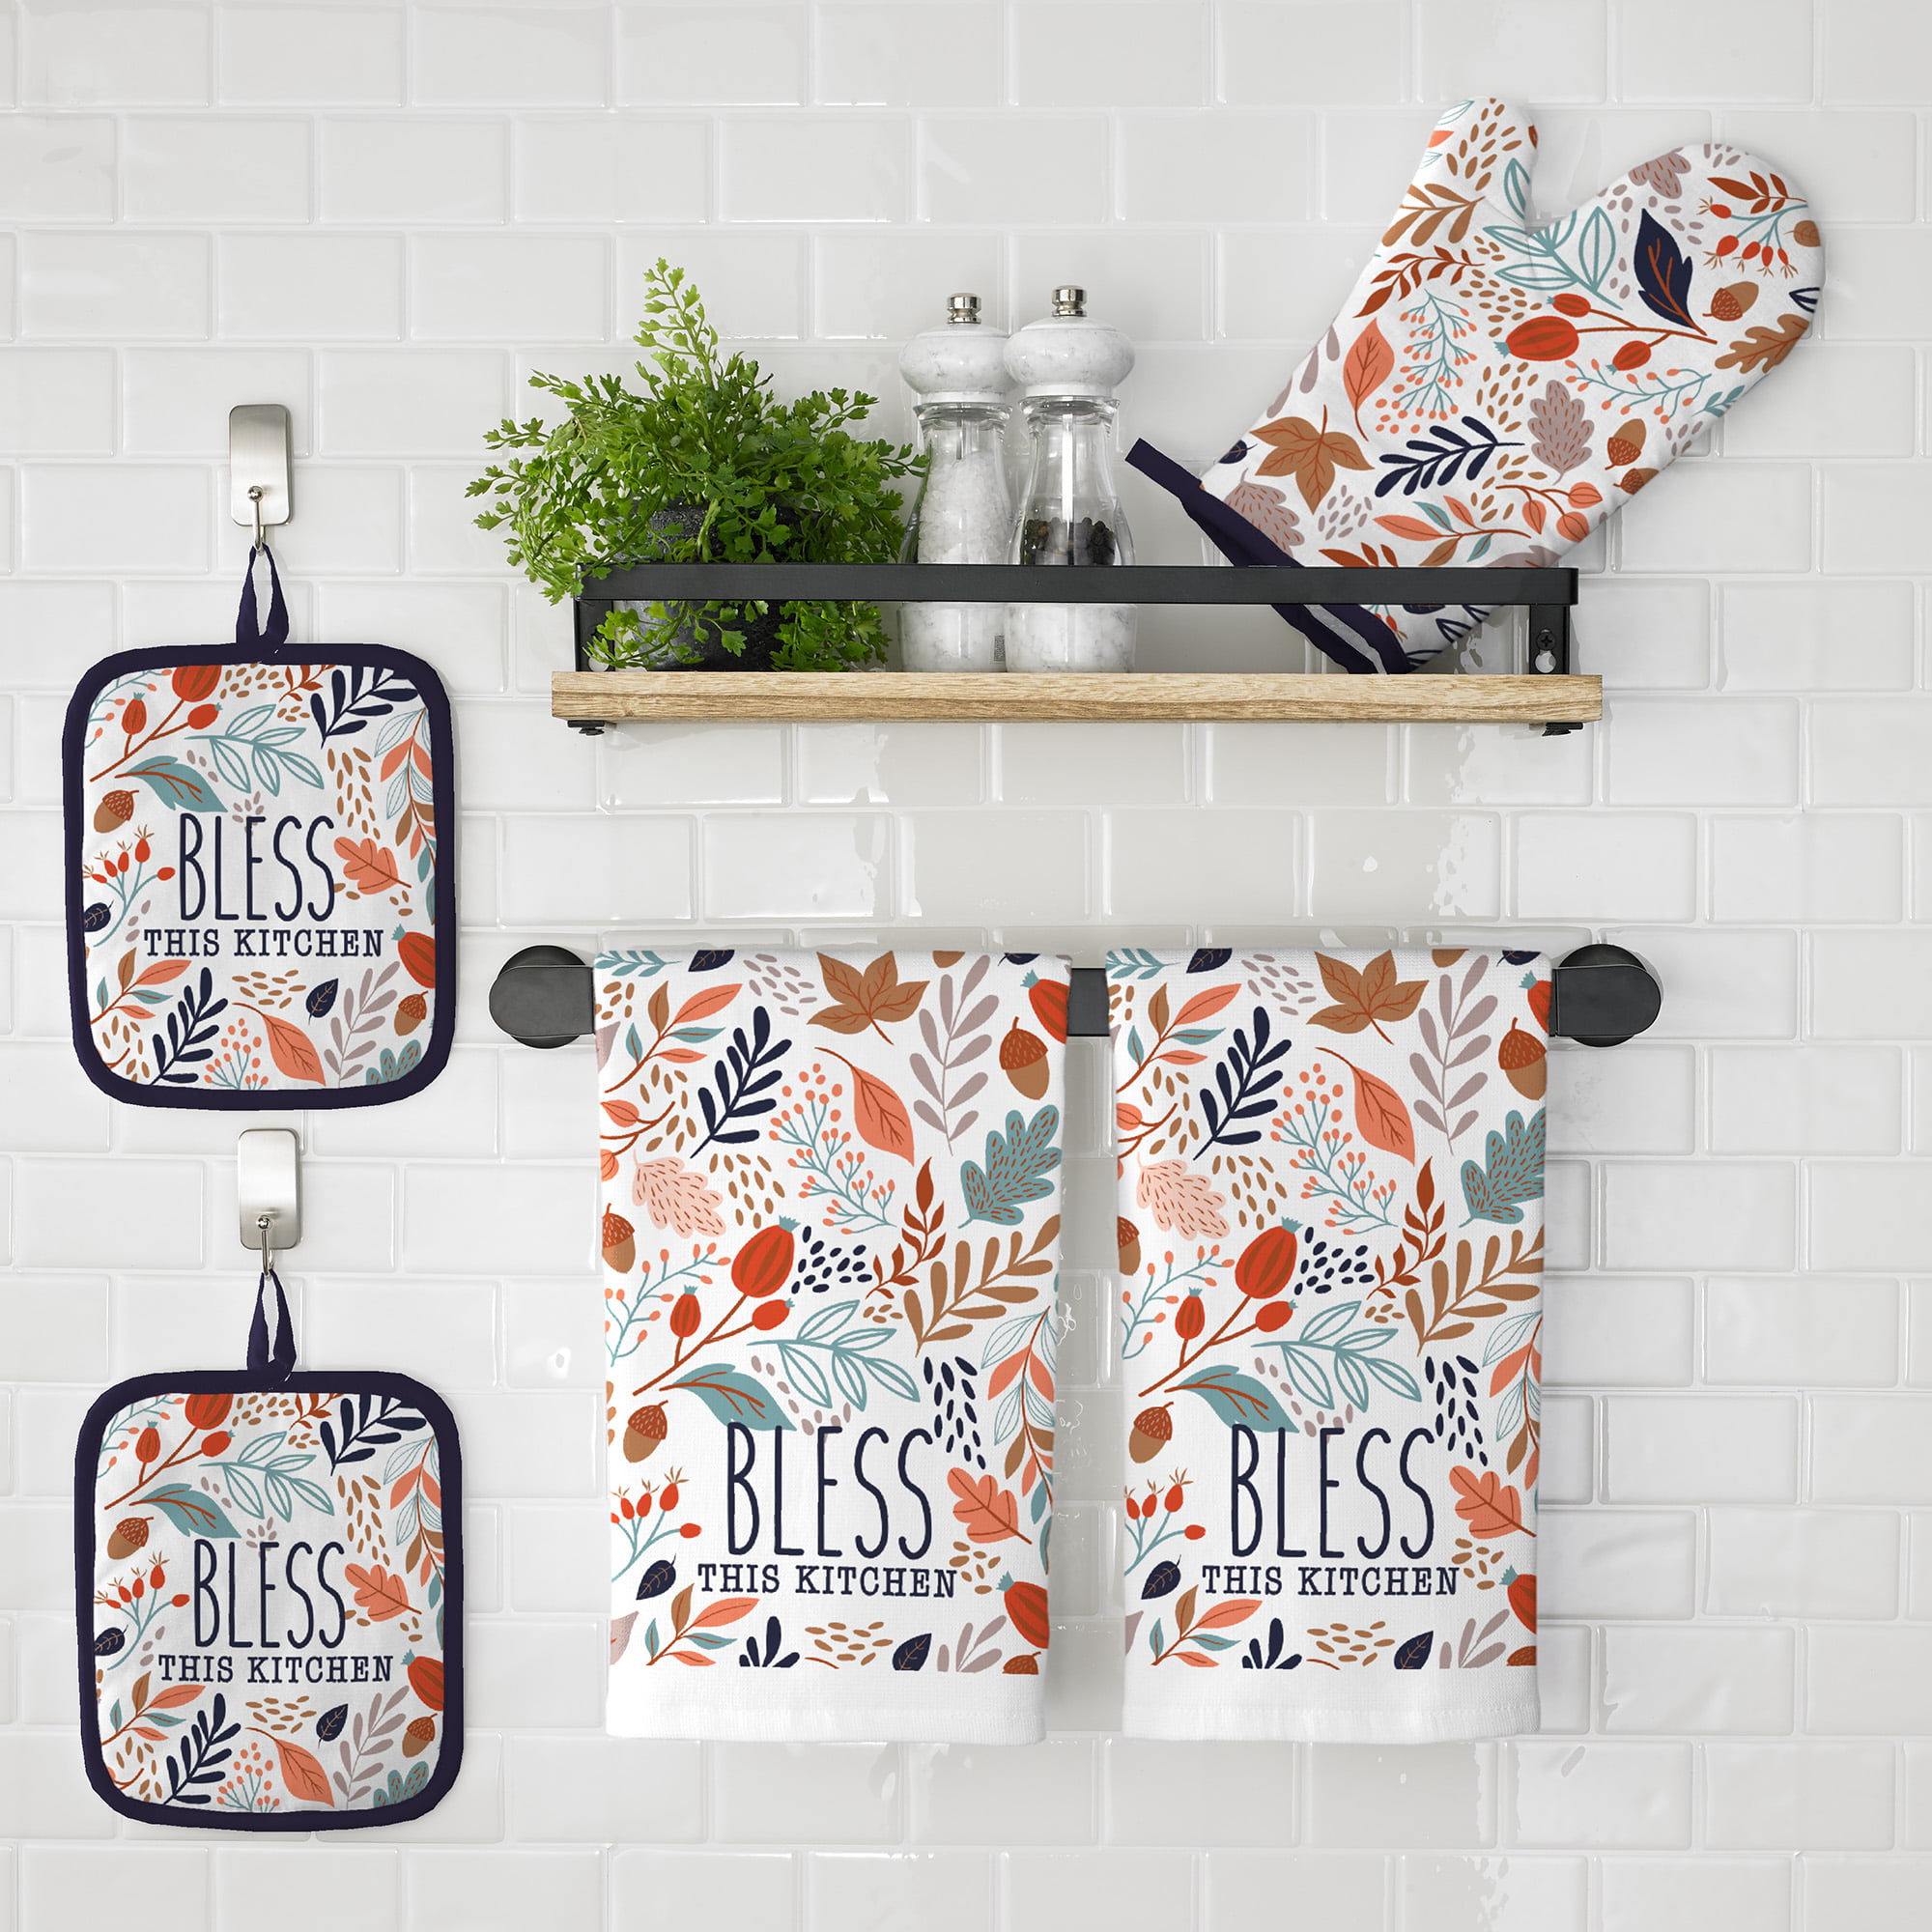 tag® Kitchen + Cloth Collection - Classic Terry Dishtowel Set - Foliage